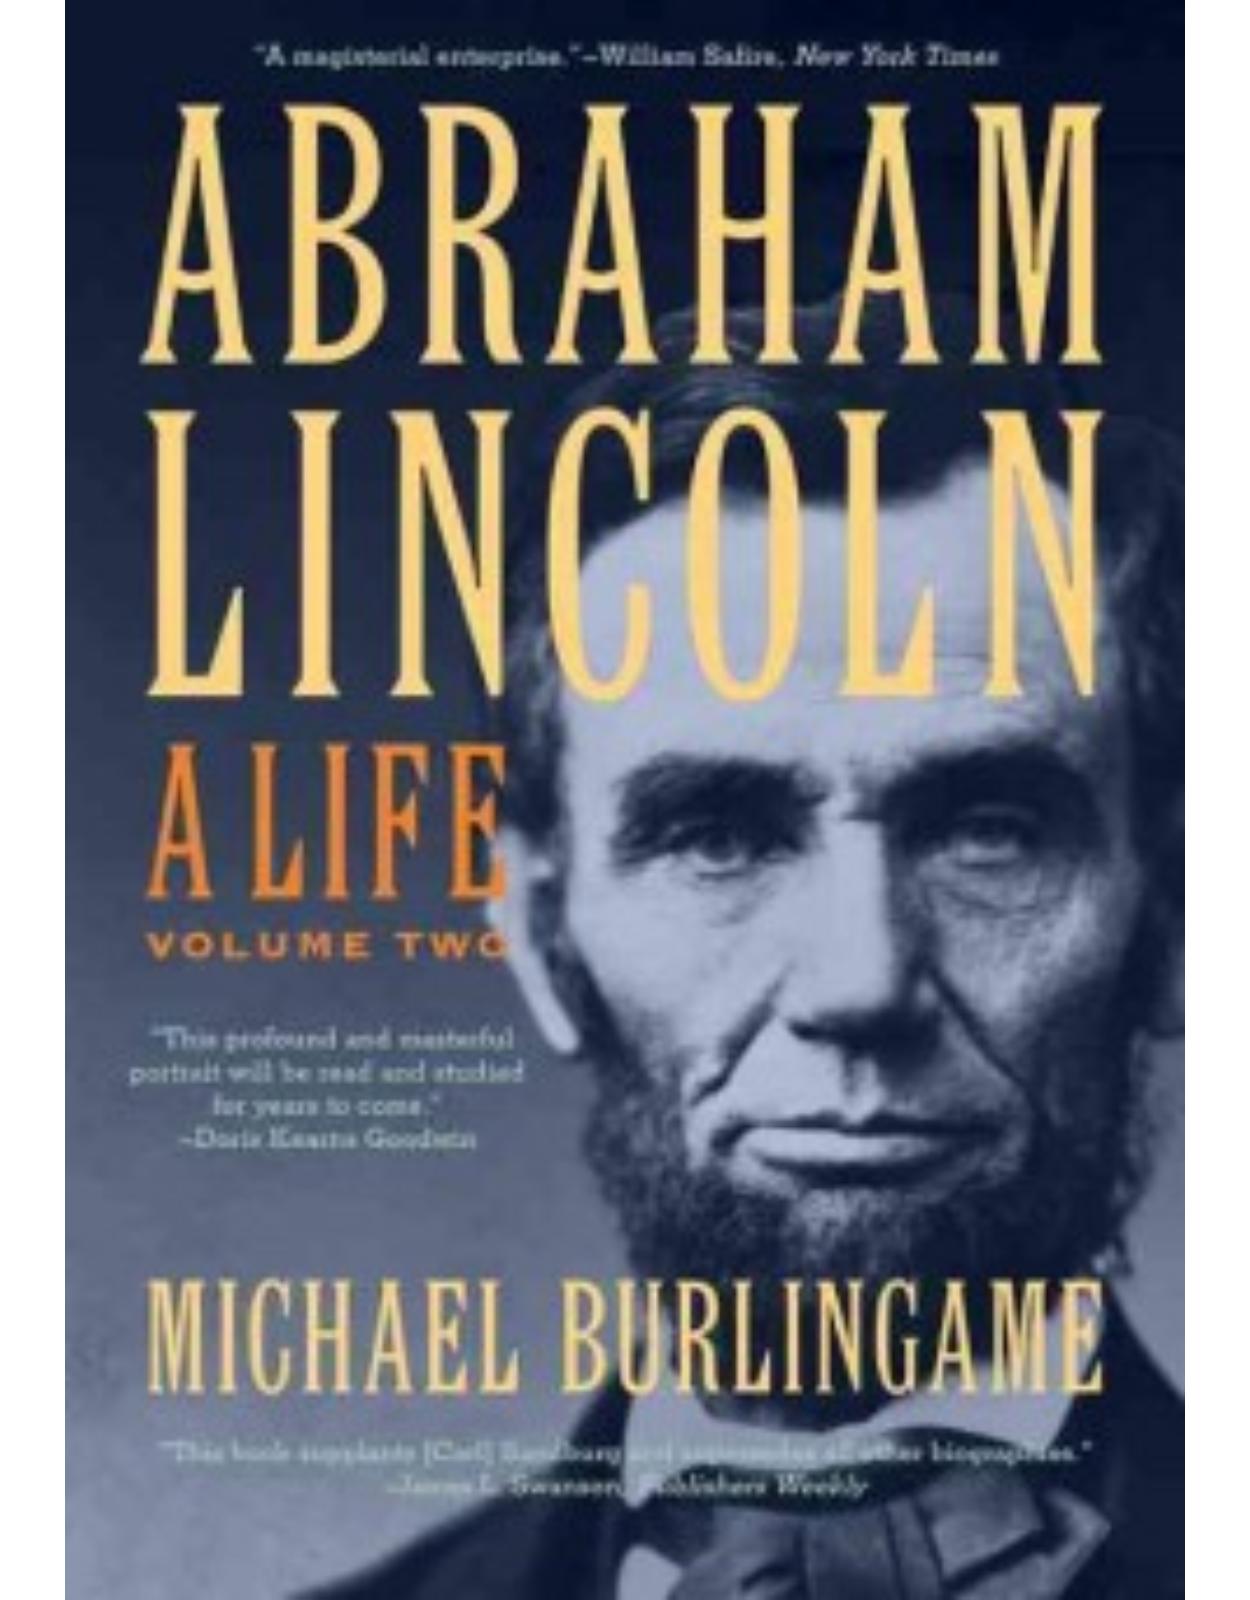 Abraham Lincoln. A Life, Volume 2